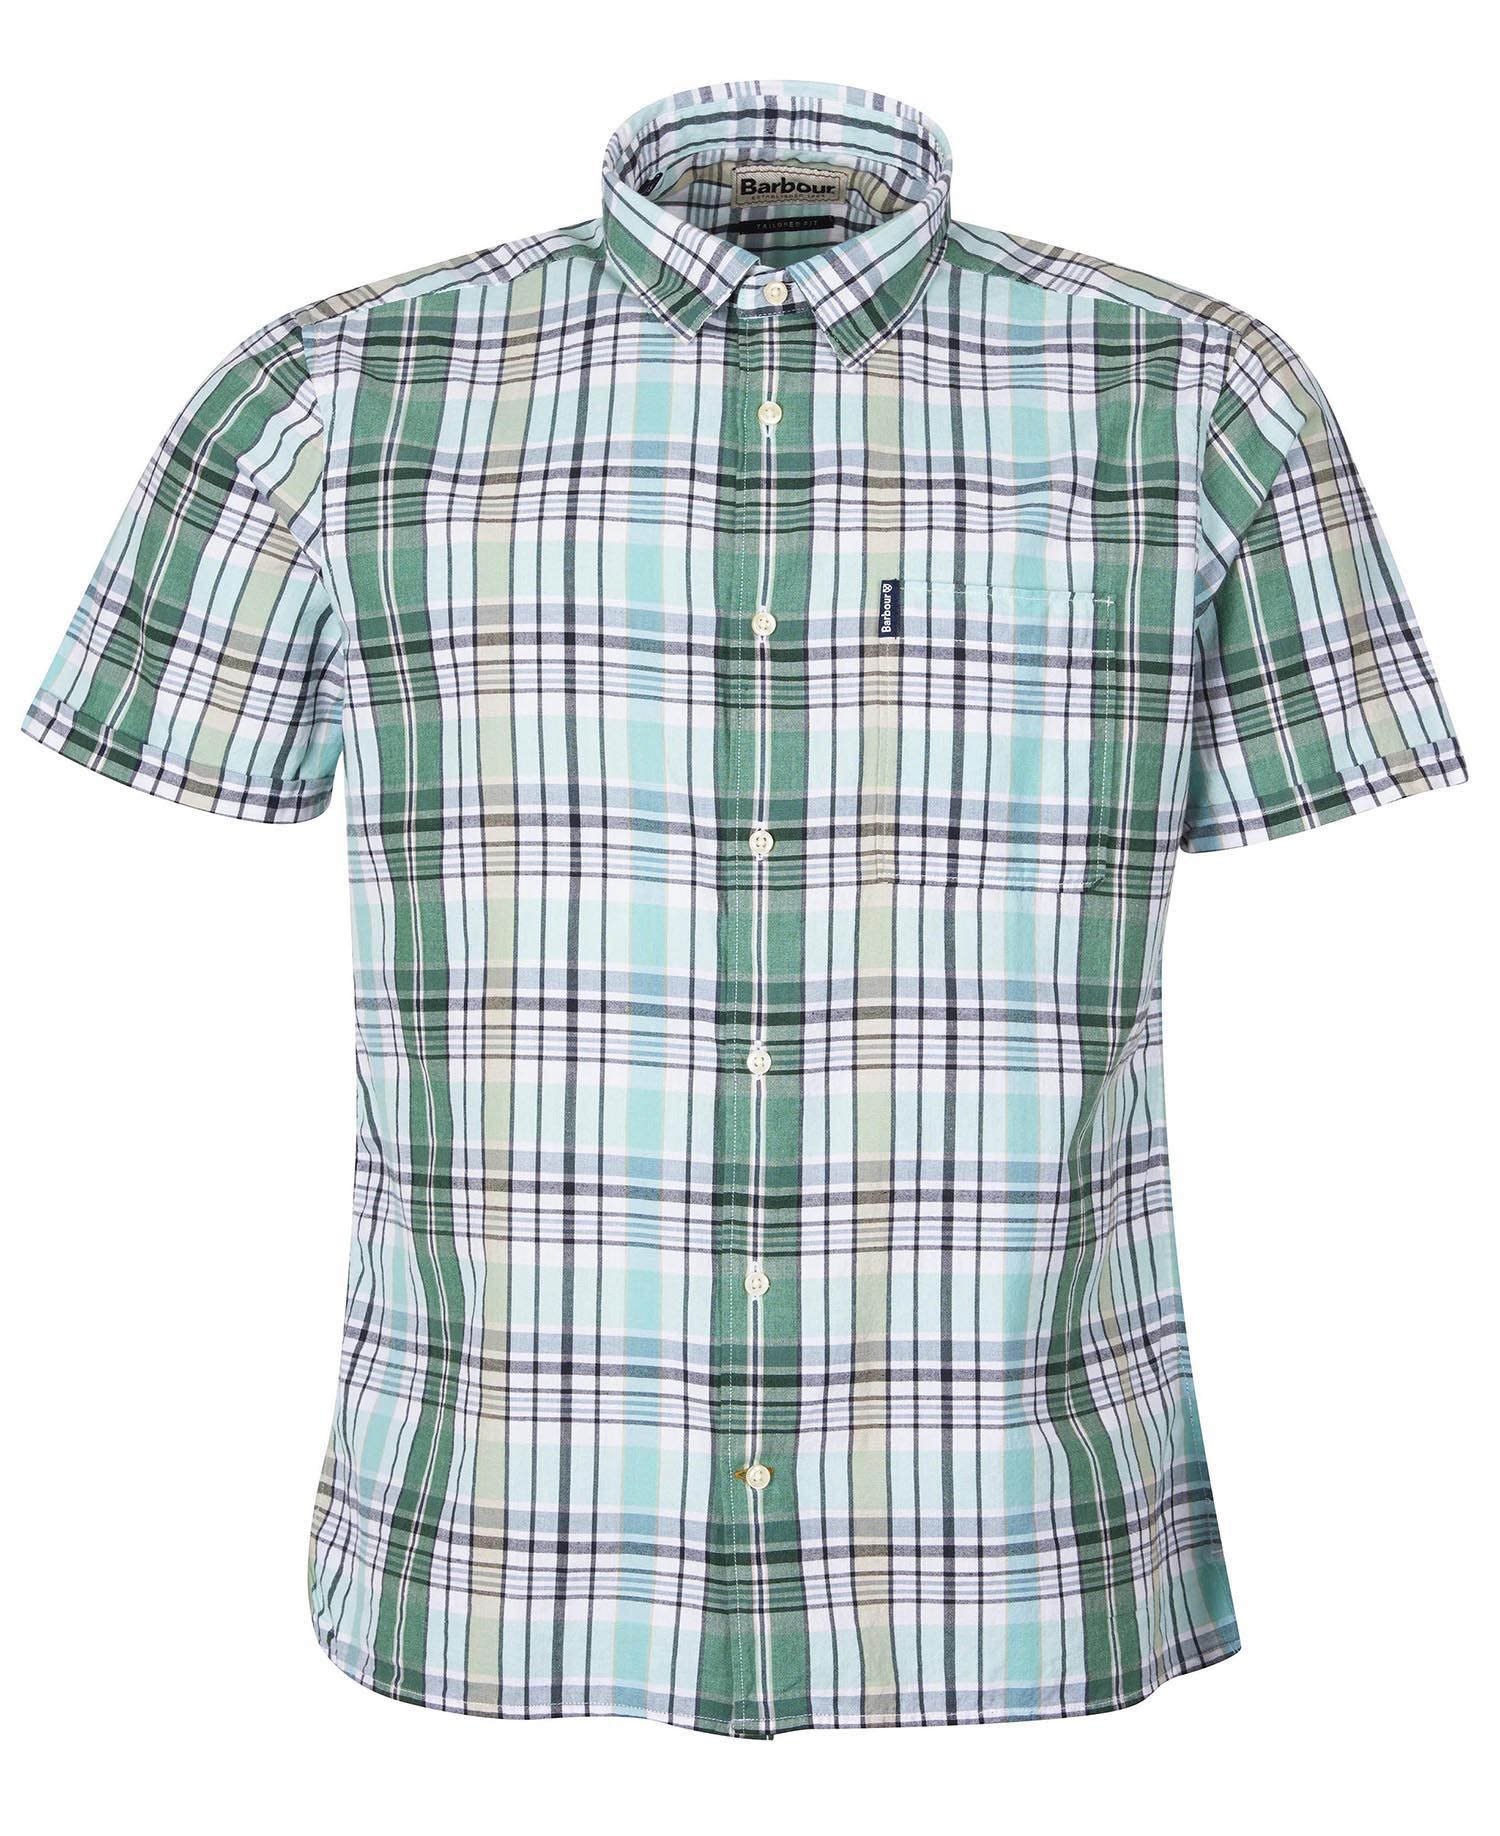 Barbour Madras 7 Short Sleeved Summer Shirt - Green ...